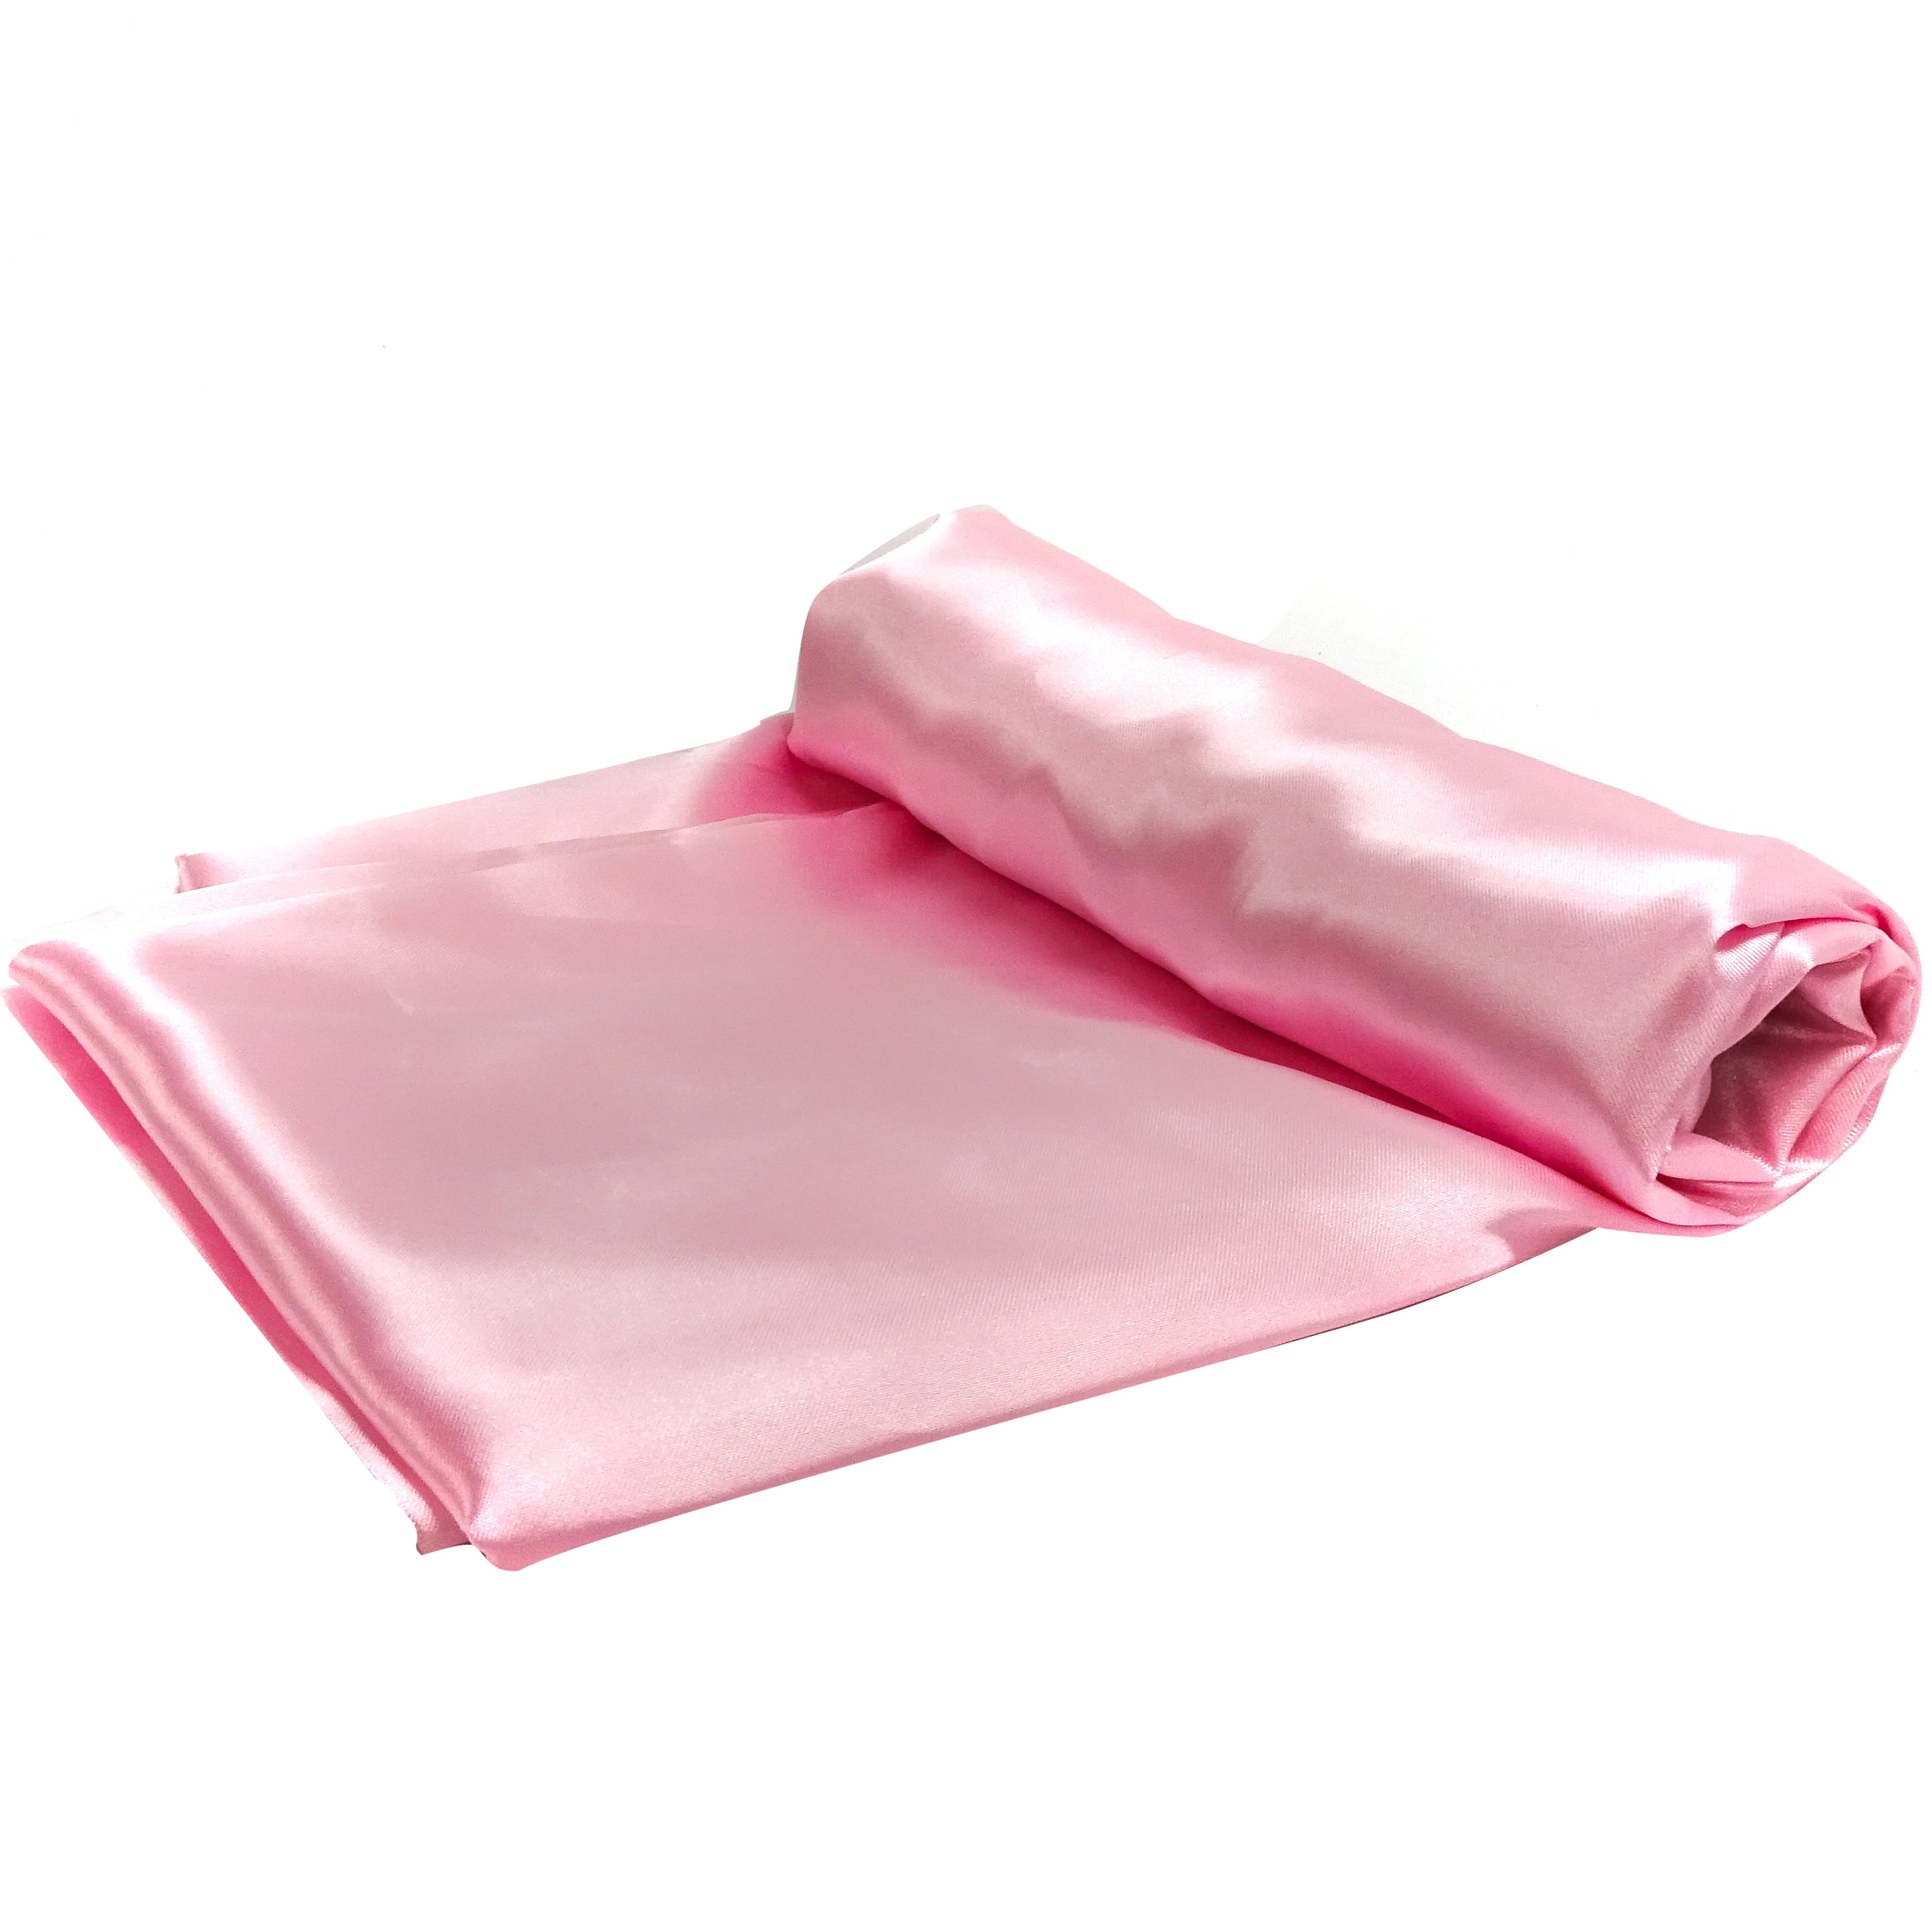 2 yard Fabric Wax Disc, Salmon pink and gold wax coupon, Pink